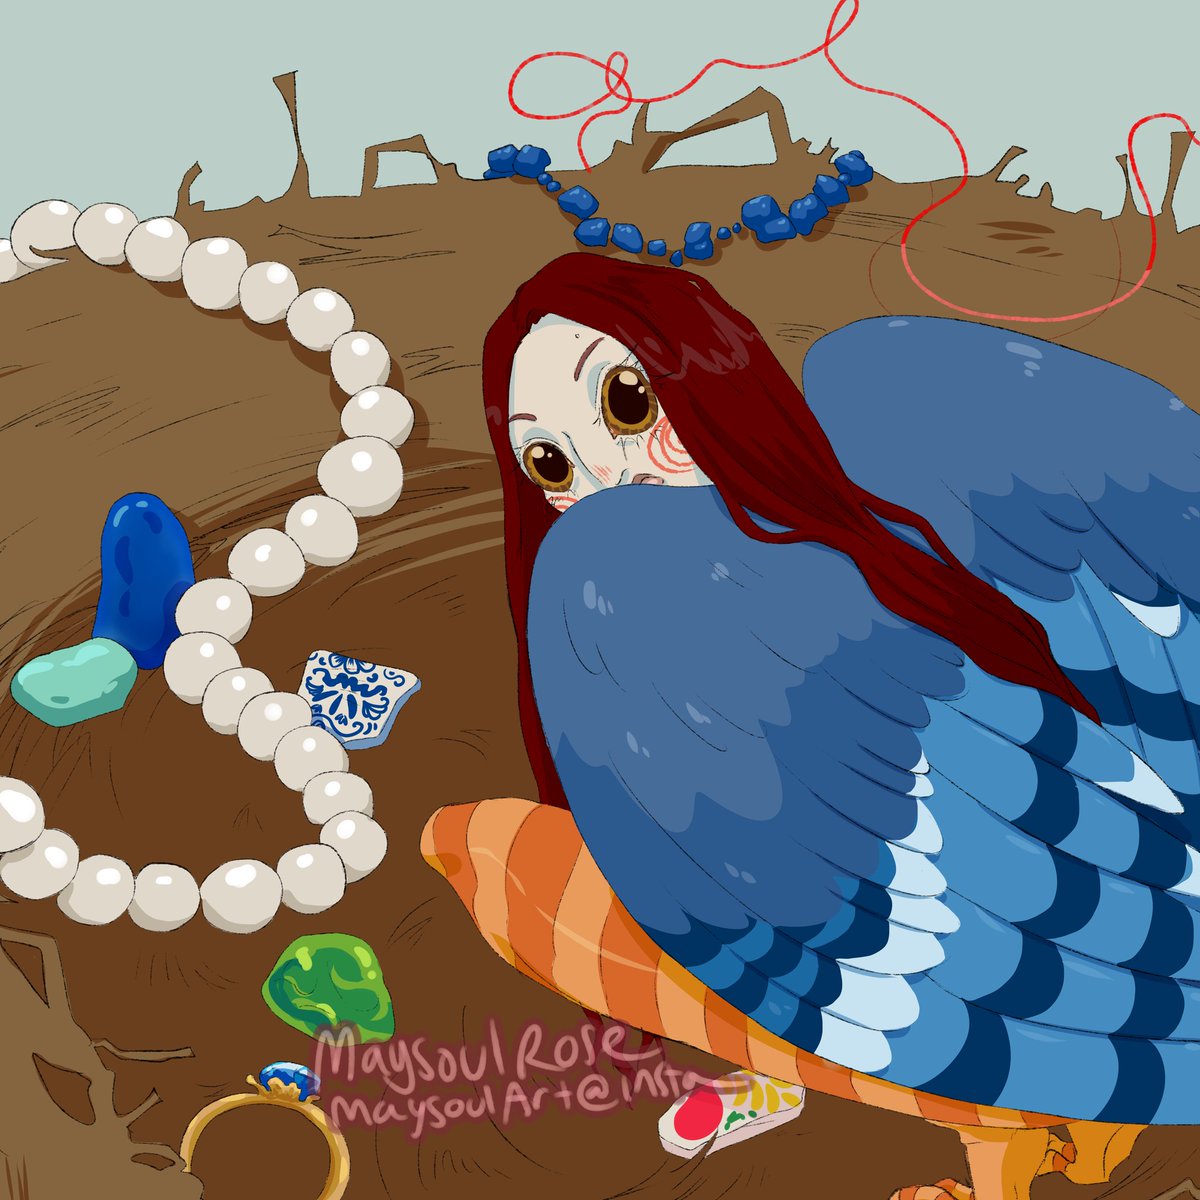 A lil harpy and her nest
-
-
-
-
#harpy #magic #magicalcreature #birdnest #character  #fantasy #creature #myth #mythology #trinkets #dragonhoard #art #artist #digitalart #original #oc #fantasyworld #mythicalcreature #worlddesign #bird #bluejay #wings #birdwings #jewelry #seaglass